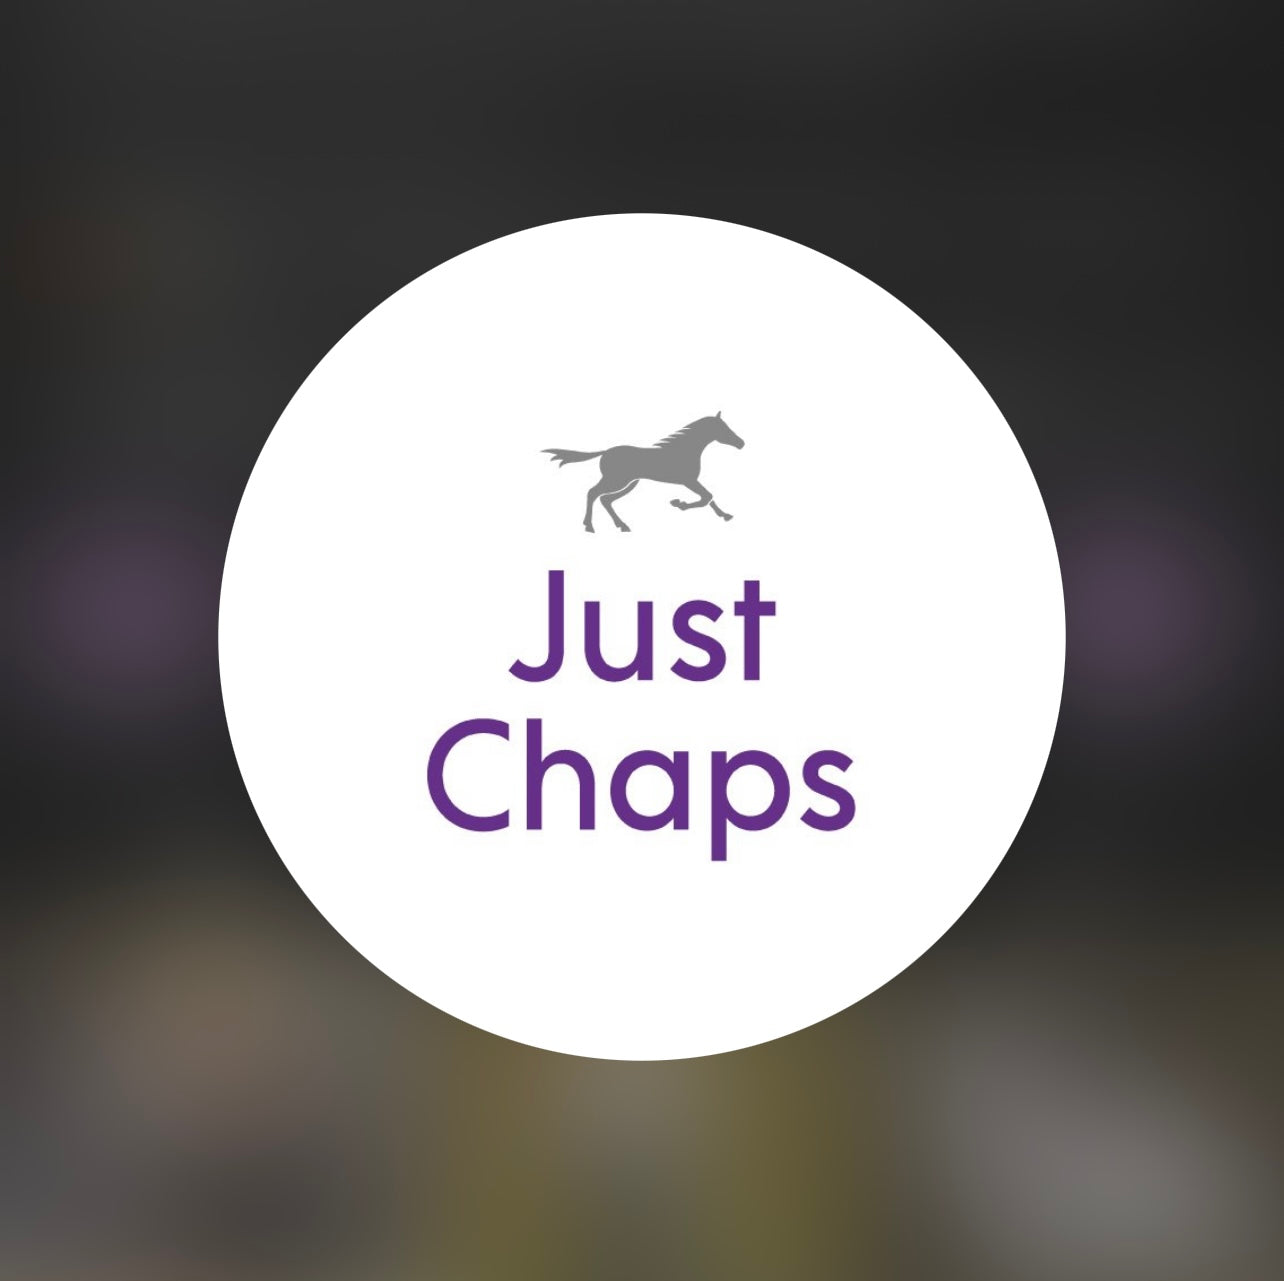 Half Chaps - Just Chaps